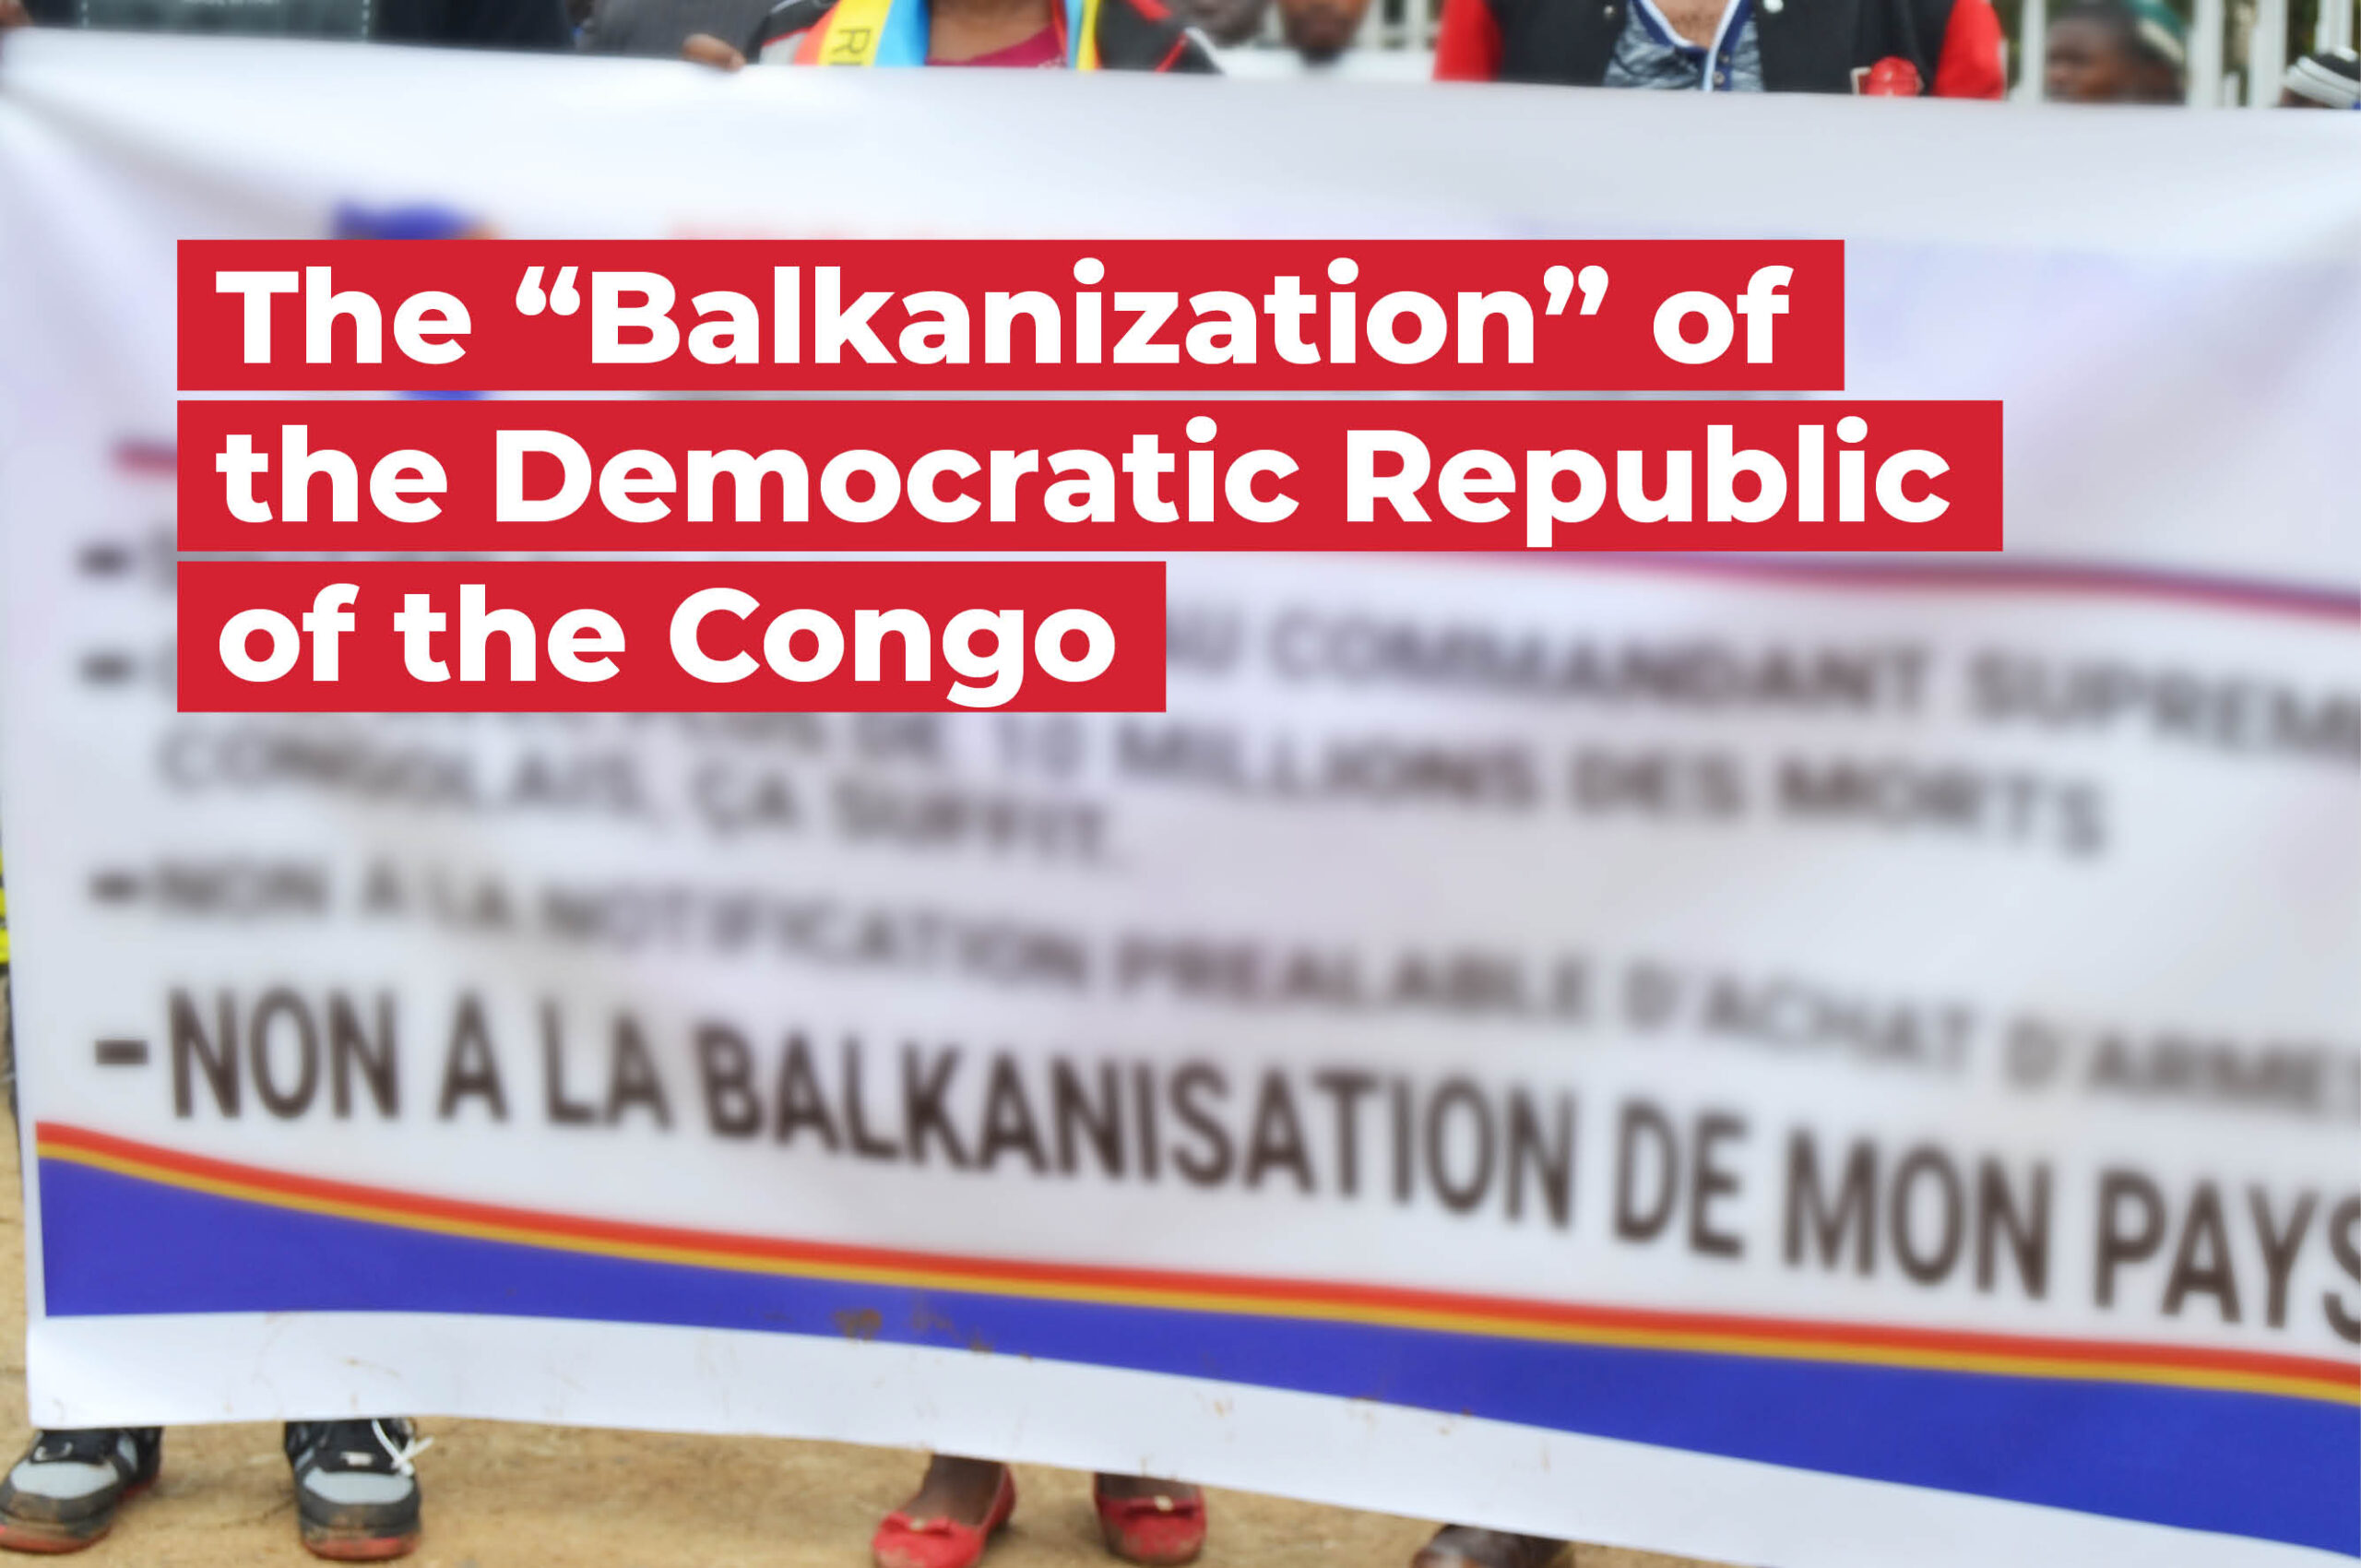 16_GIC_The “Balkanization” of the Democratic Republic of the Congo_BANNERS_2